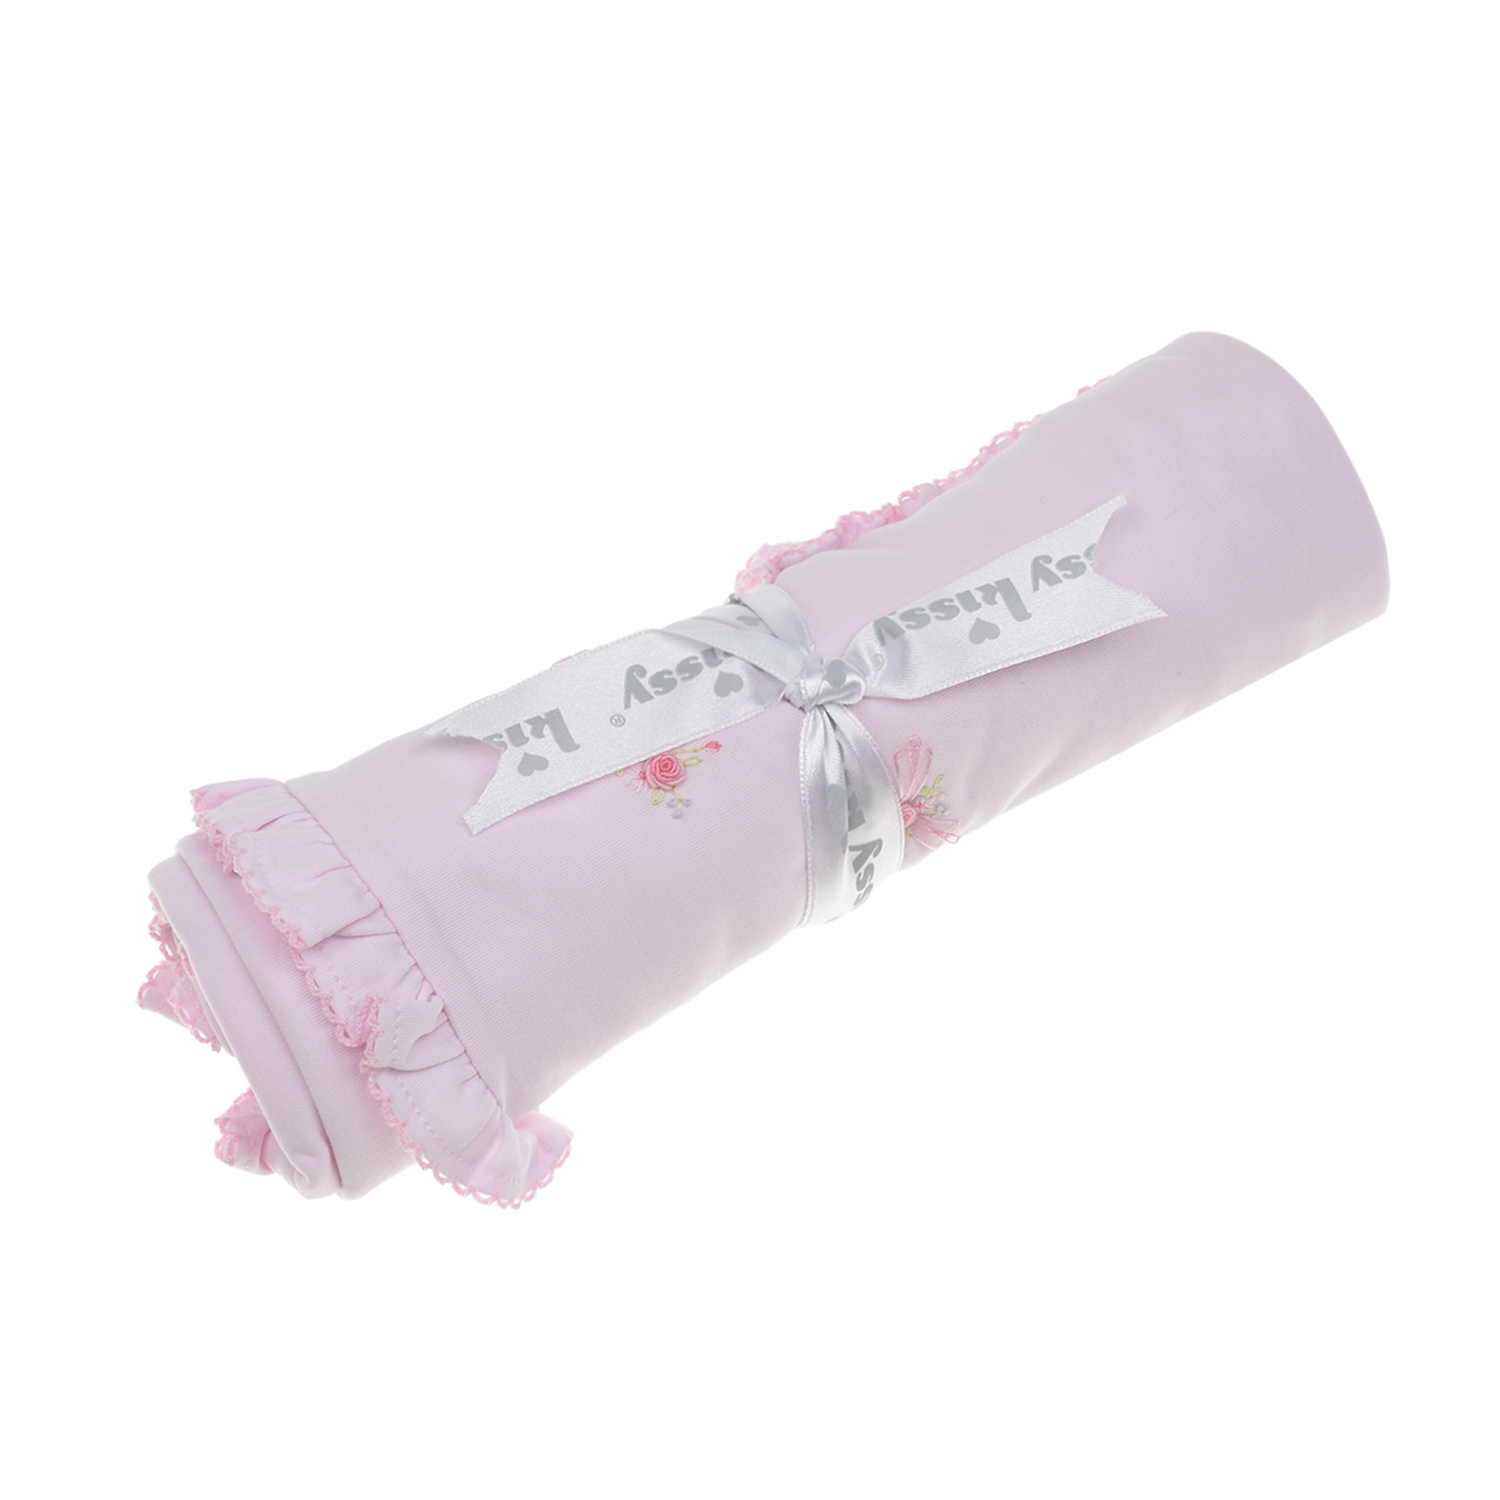 Розовый плед с цветочной вышивкой Kissy Kissy детский, размер unica - фото 1